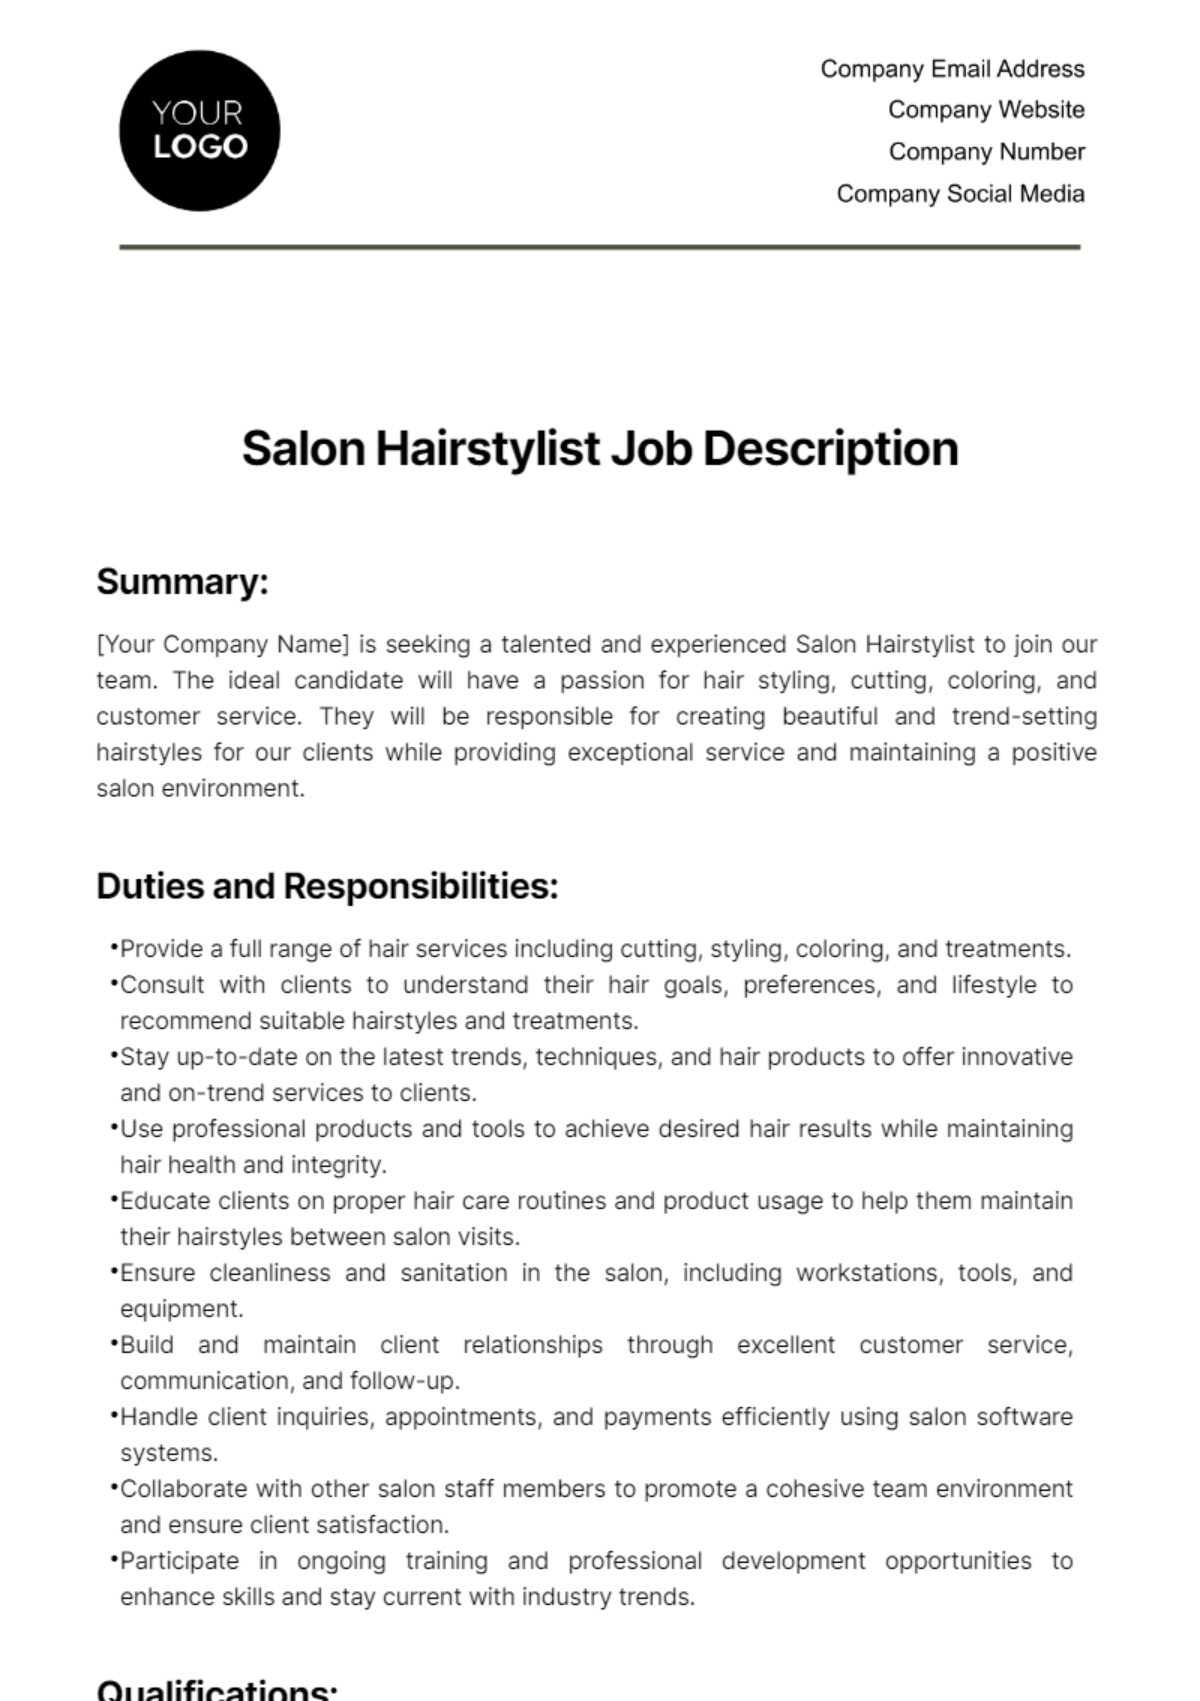 Free Salon Hairstylist Job Description Template